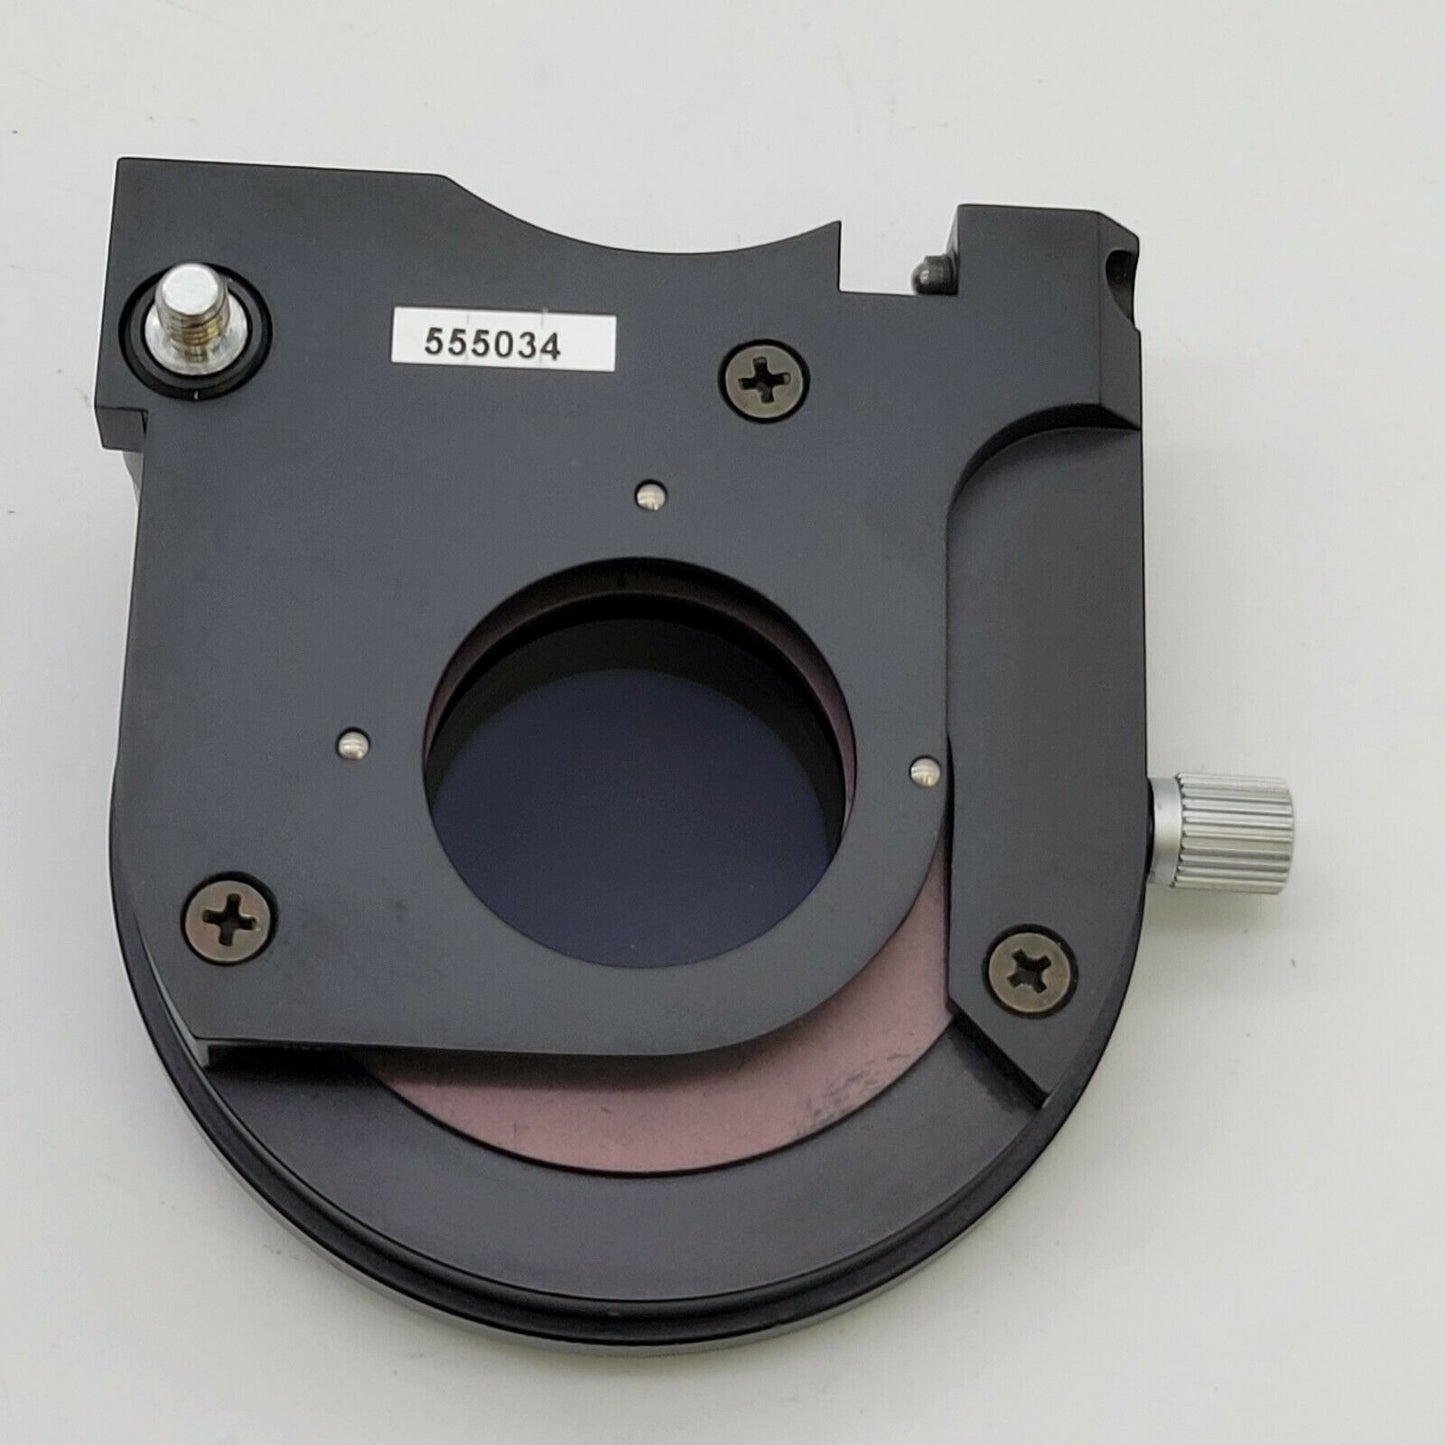 Leica Microscope Polarizer Analyzer Set L ICT/P for DM Series 11555045 11555034 - microscopemarketplace